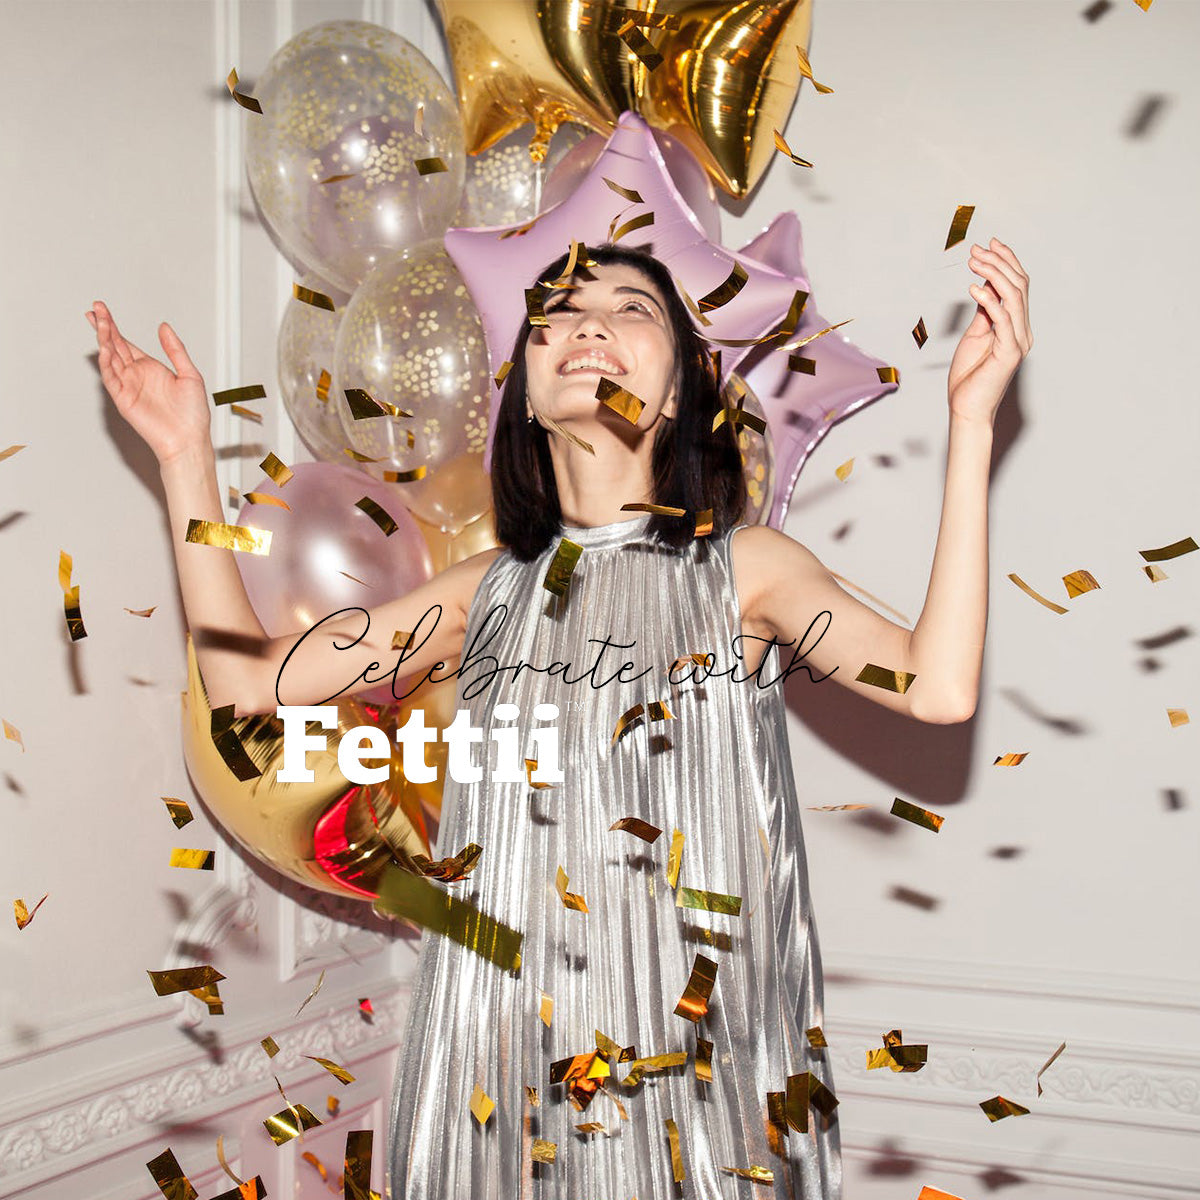 Celebrate with Fettii - Wine Bottle Gift Bags Australia